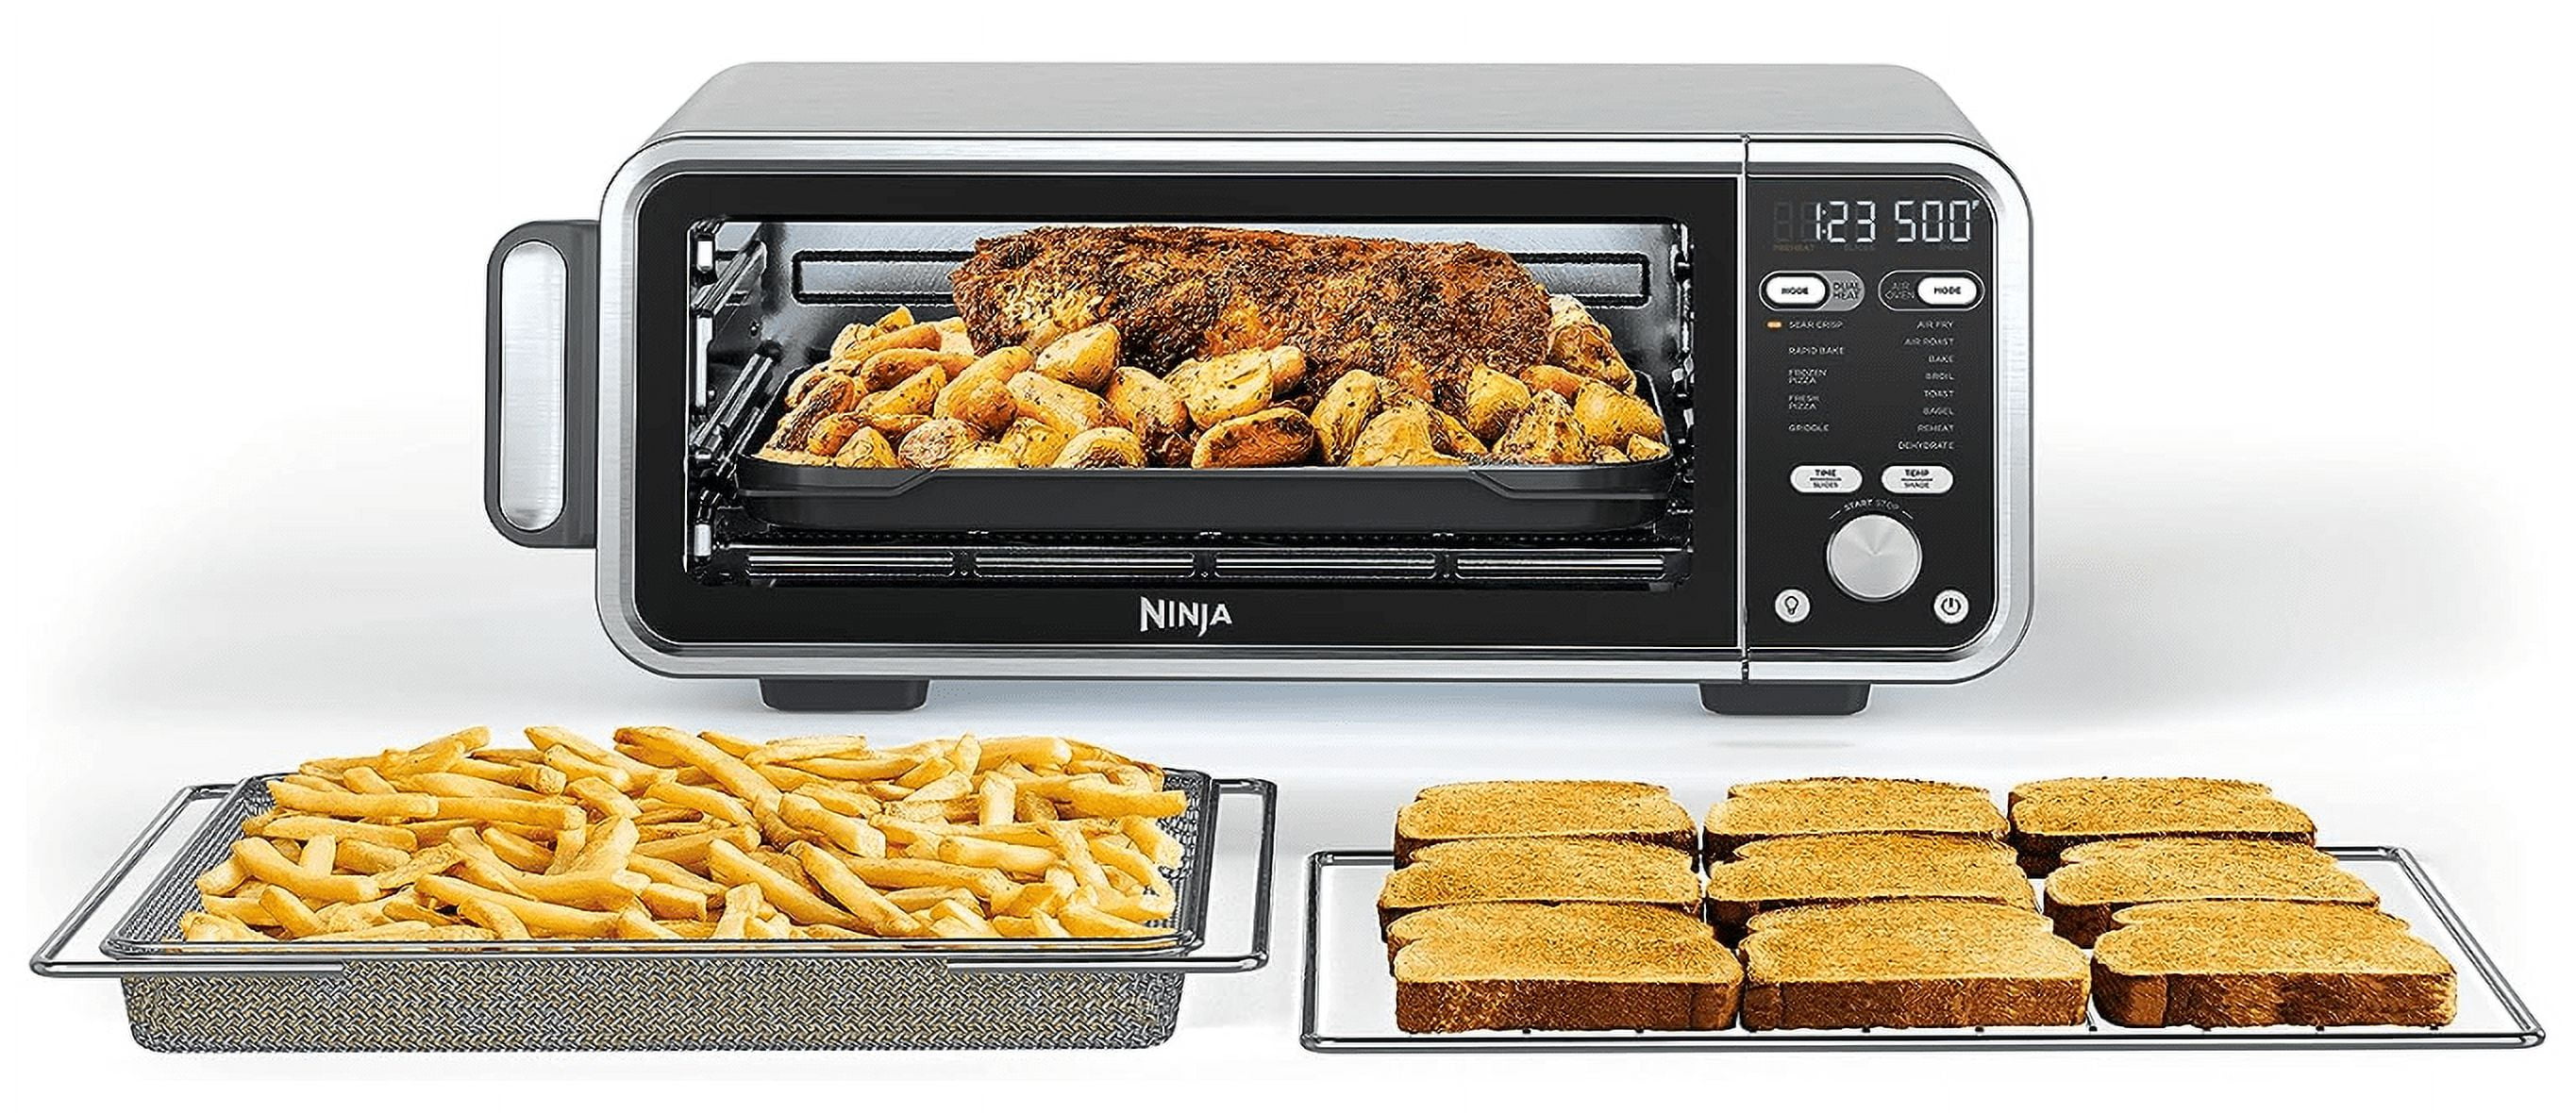 Hzpowen Air Fryer Oven Liners 3 Pcs Compatible with Ninja Foodi SP101 SP201 Sp301, Non-Stick Air Fryer Toaster Oven Mat(12 * 12inch) Reusable